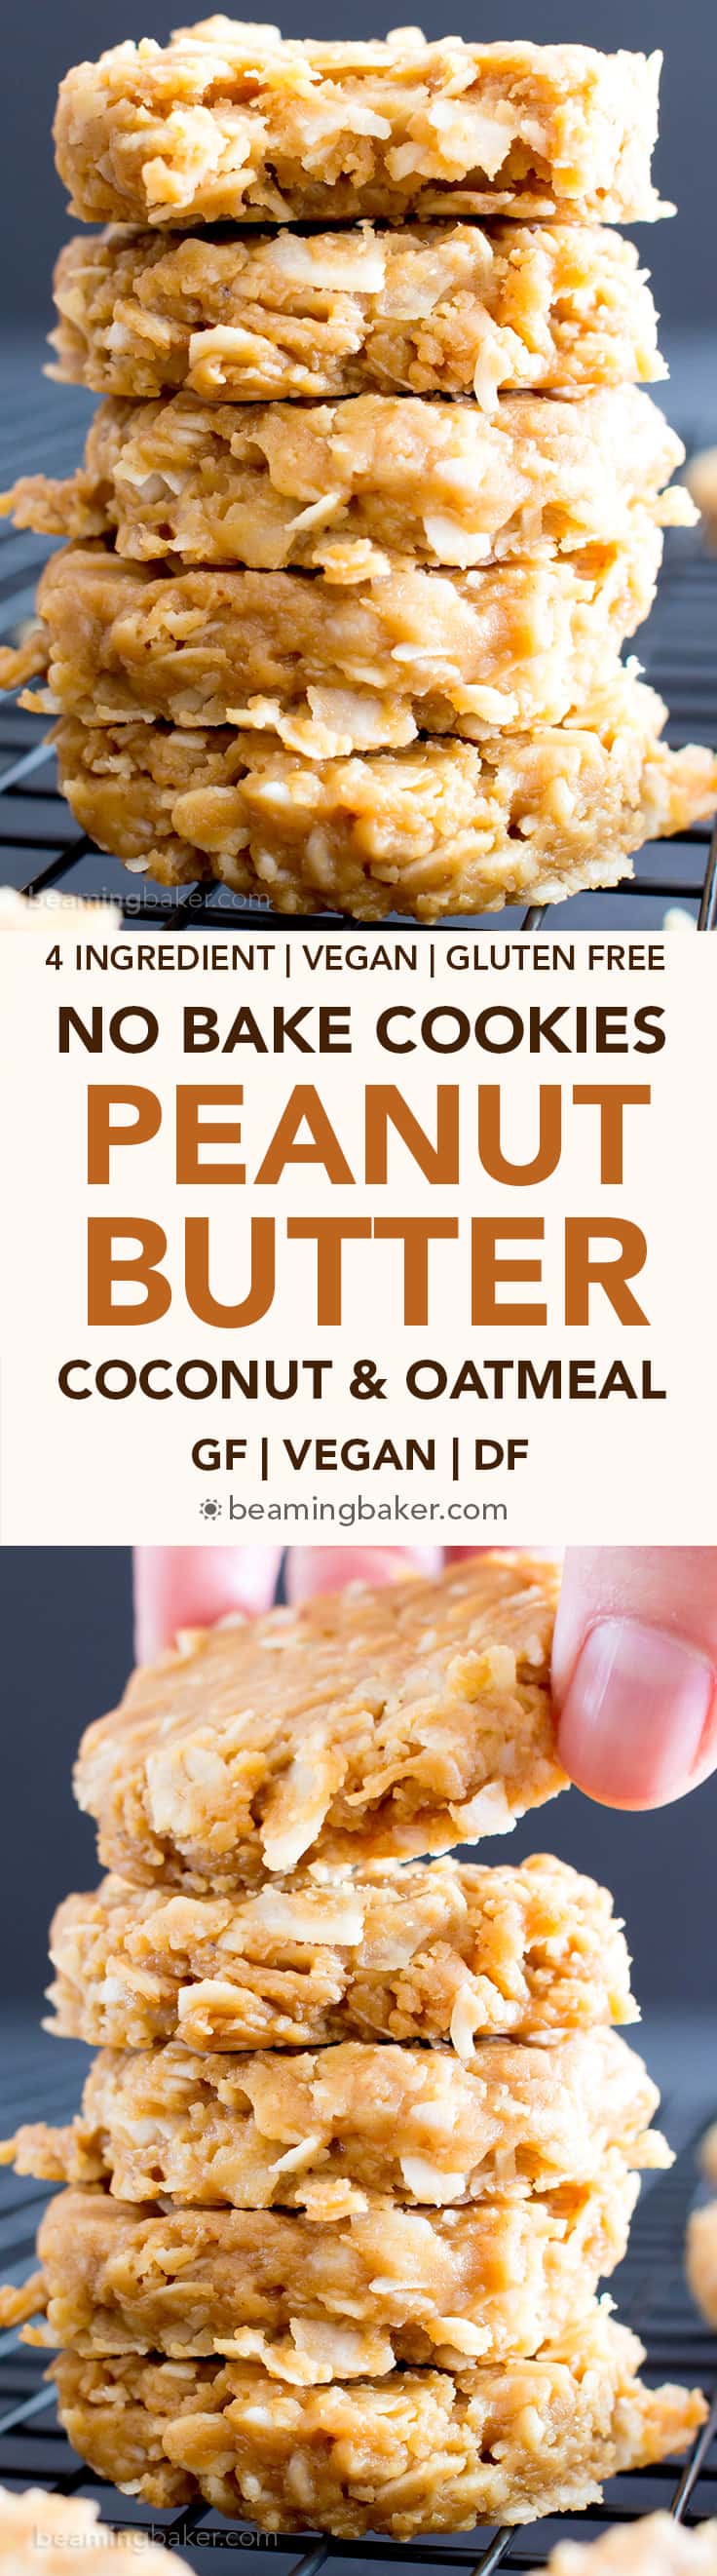 4 Ingredient No Bake Peanut Butter Coconut Oatmeal Cookies (V, GF): a one-bowl recipe for super easy to make peanut butter cookies packed with coconut and oats! #GlutenFree #Vegan #WholeGrain #RefinedSugarFree | BeamingBaker.com